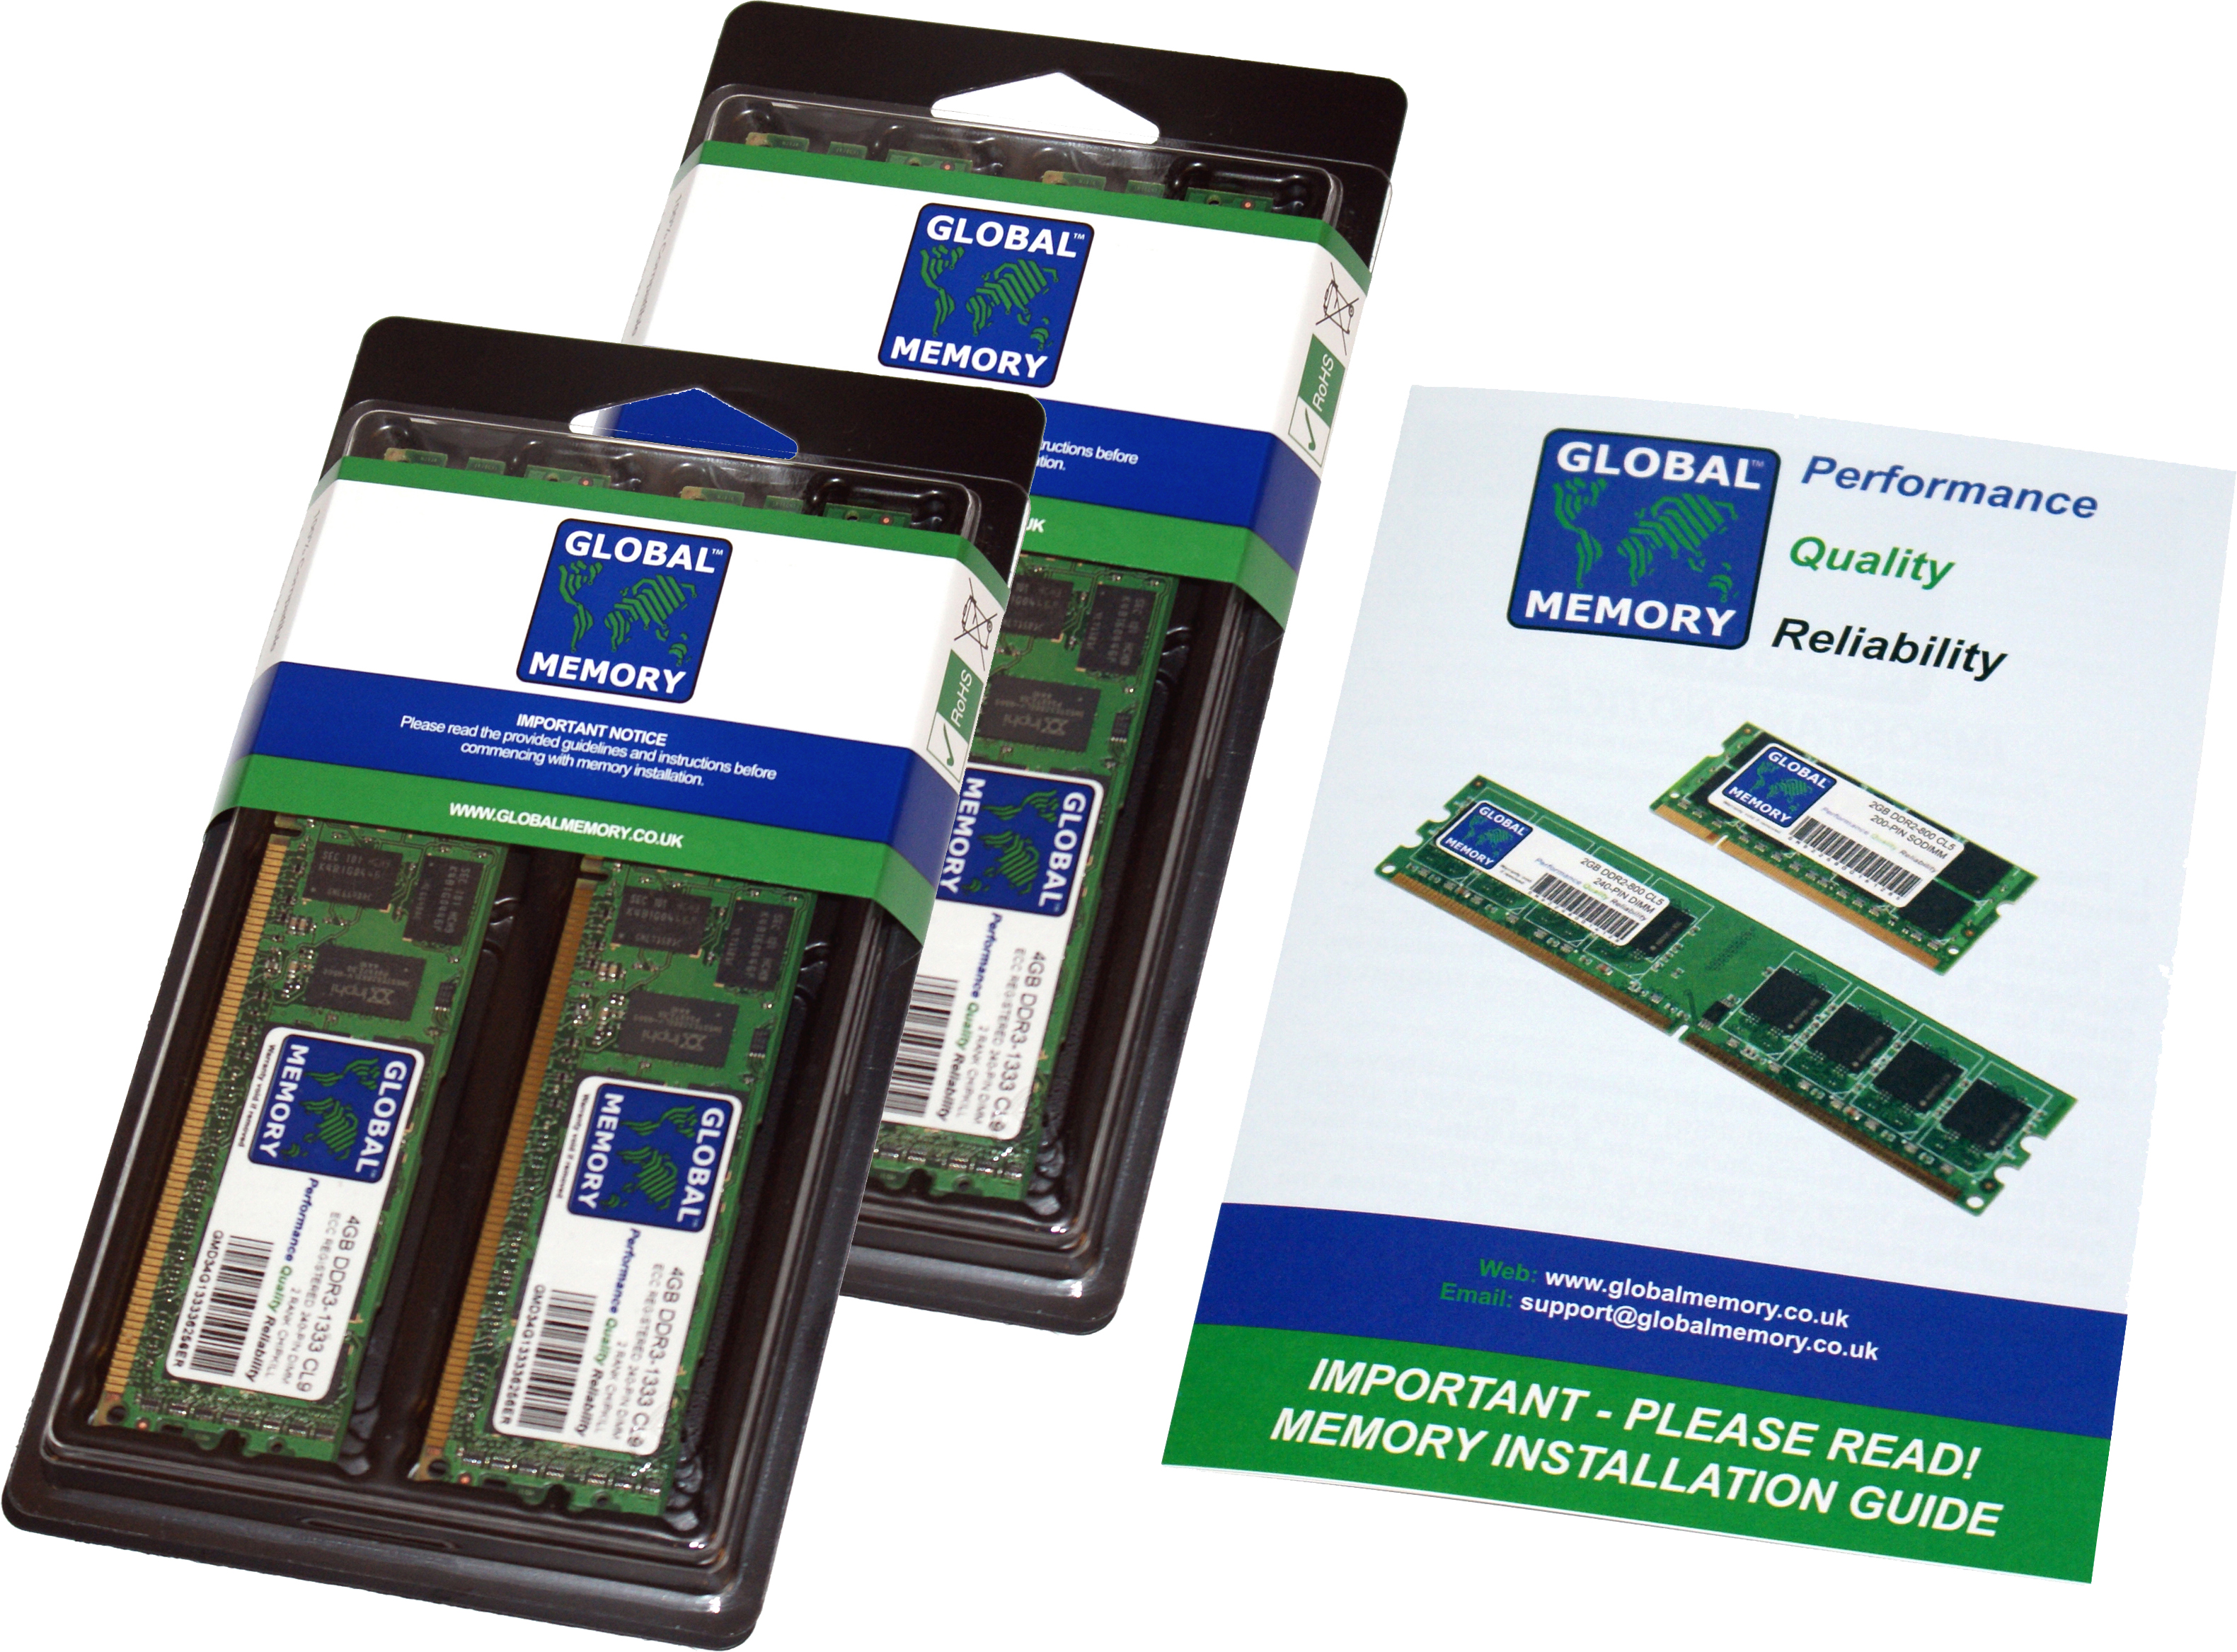 128GB (4 x 32GB) DDR4 2666MHz PC4-21300 288-PIN ECC REGISTERED DIMM (RDIMM) MEMORY RAM KIT FOR DELL SERVERS/WORKSTATIONS (8 RANK KIT CHIPKILL)